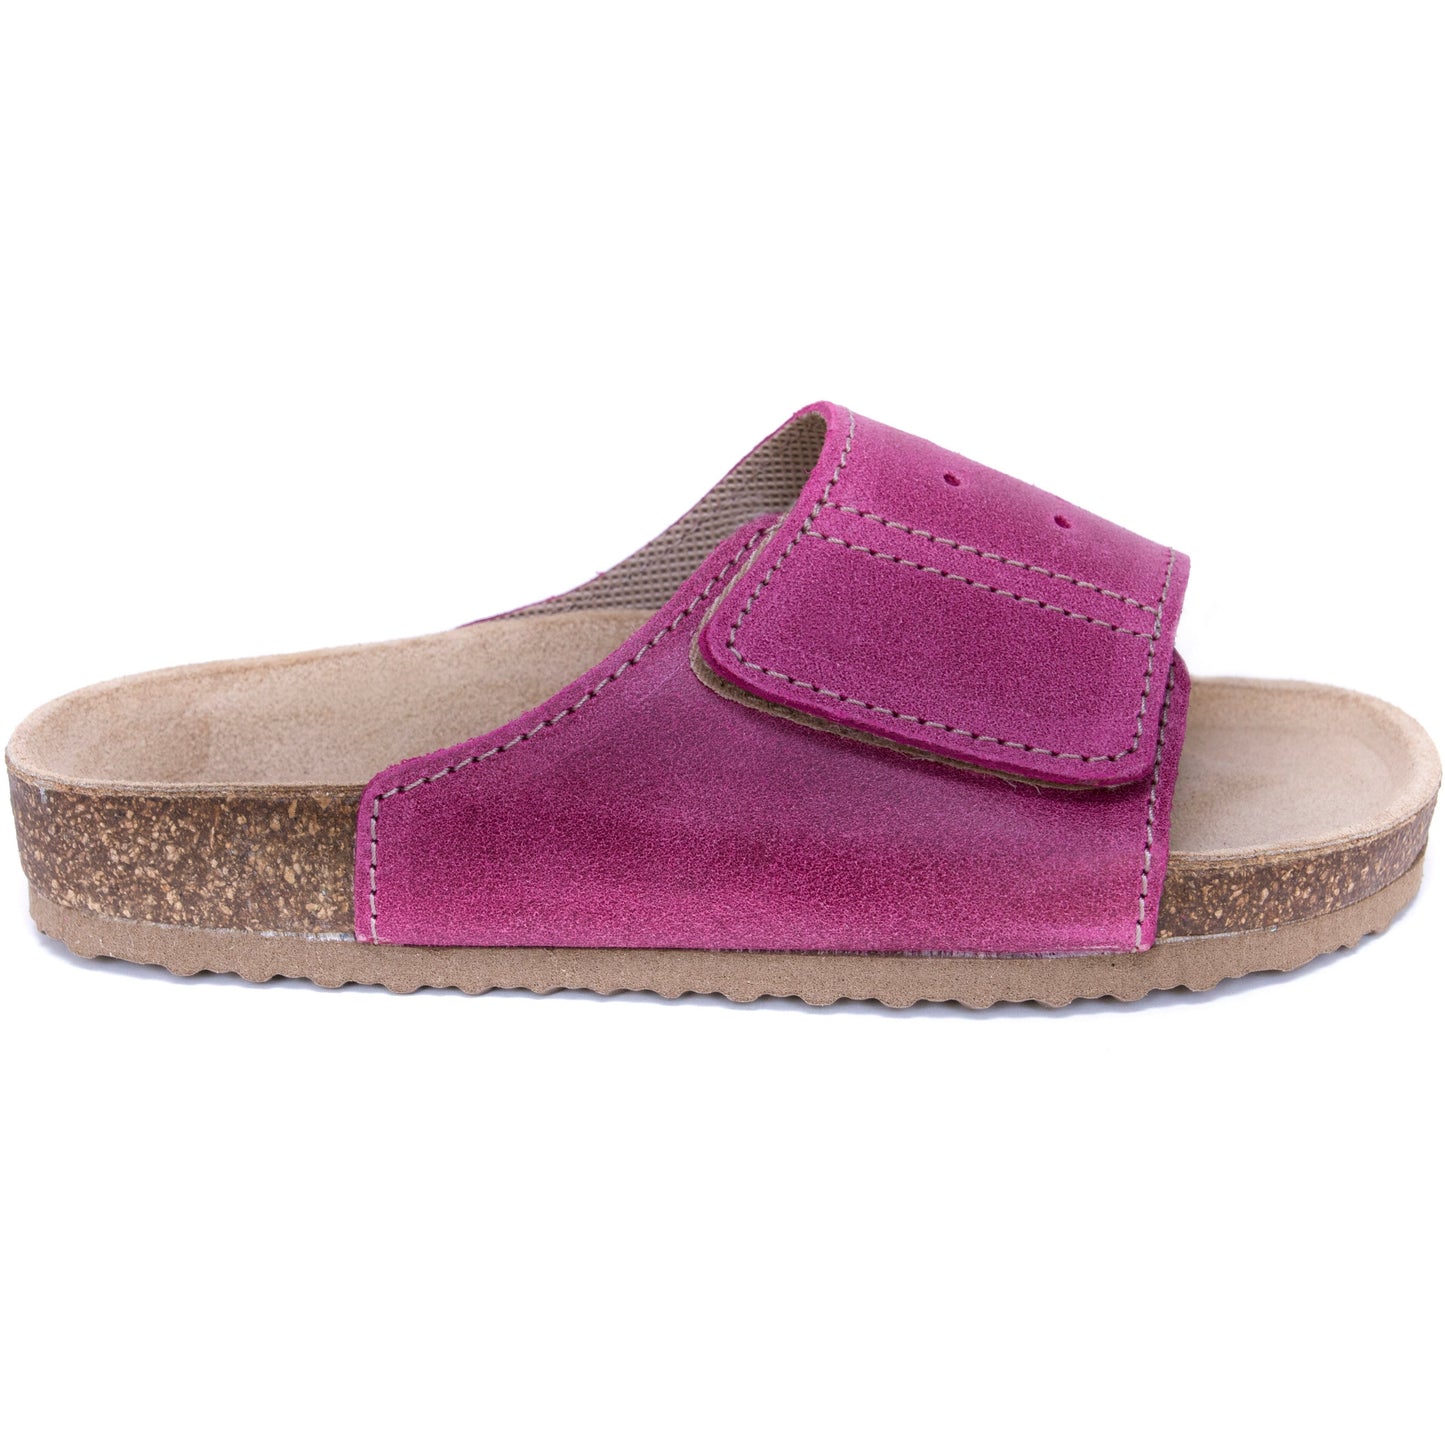 T56: color 80 - pink ladies orthotic sandals